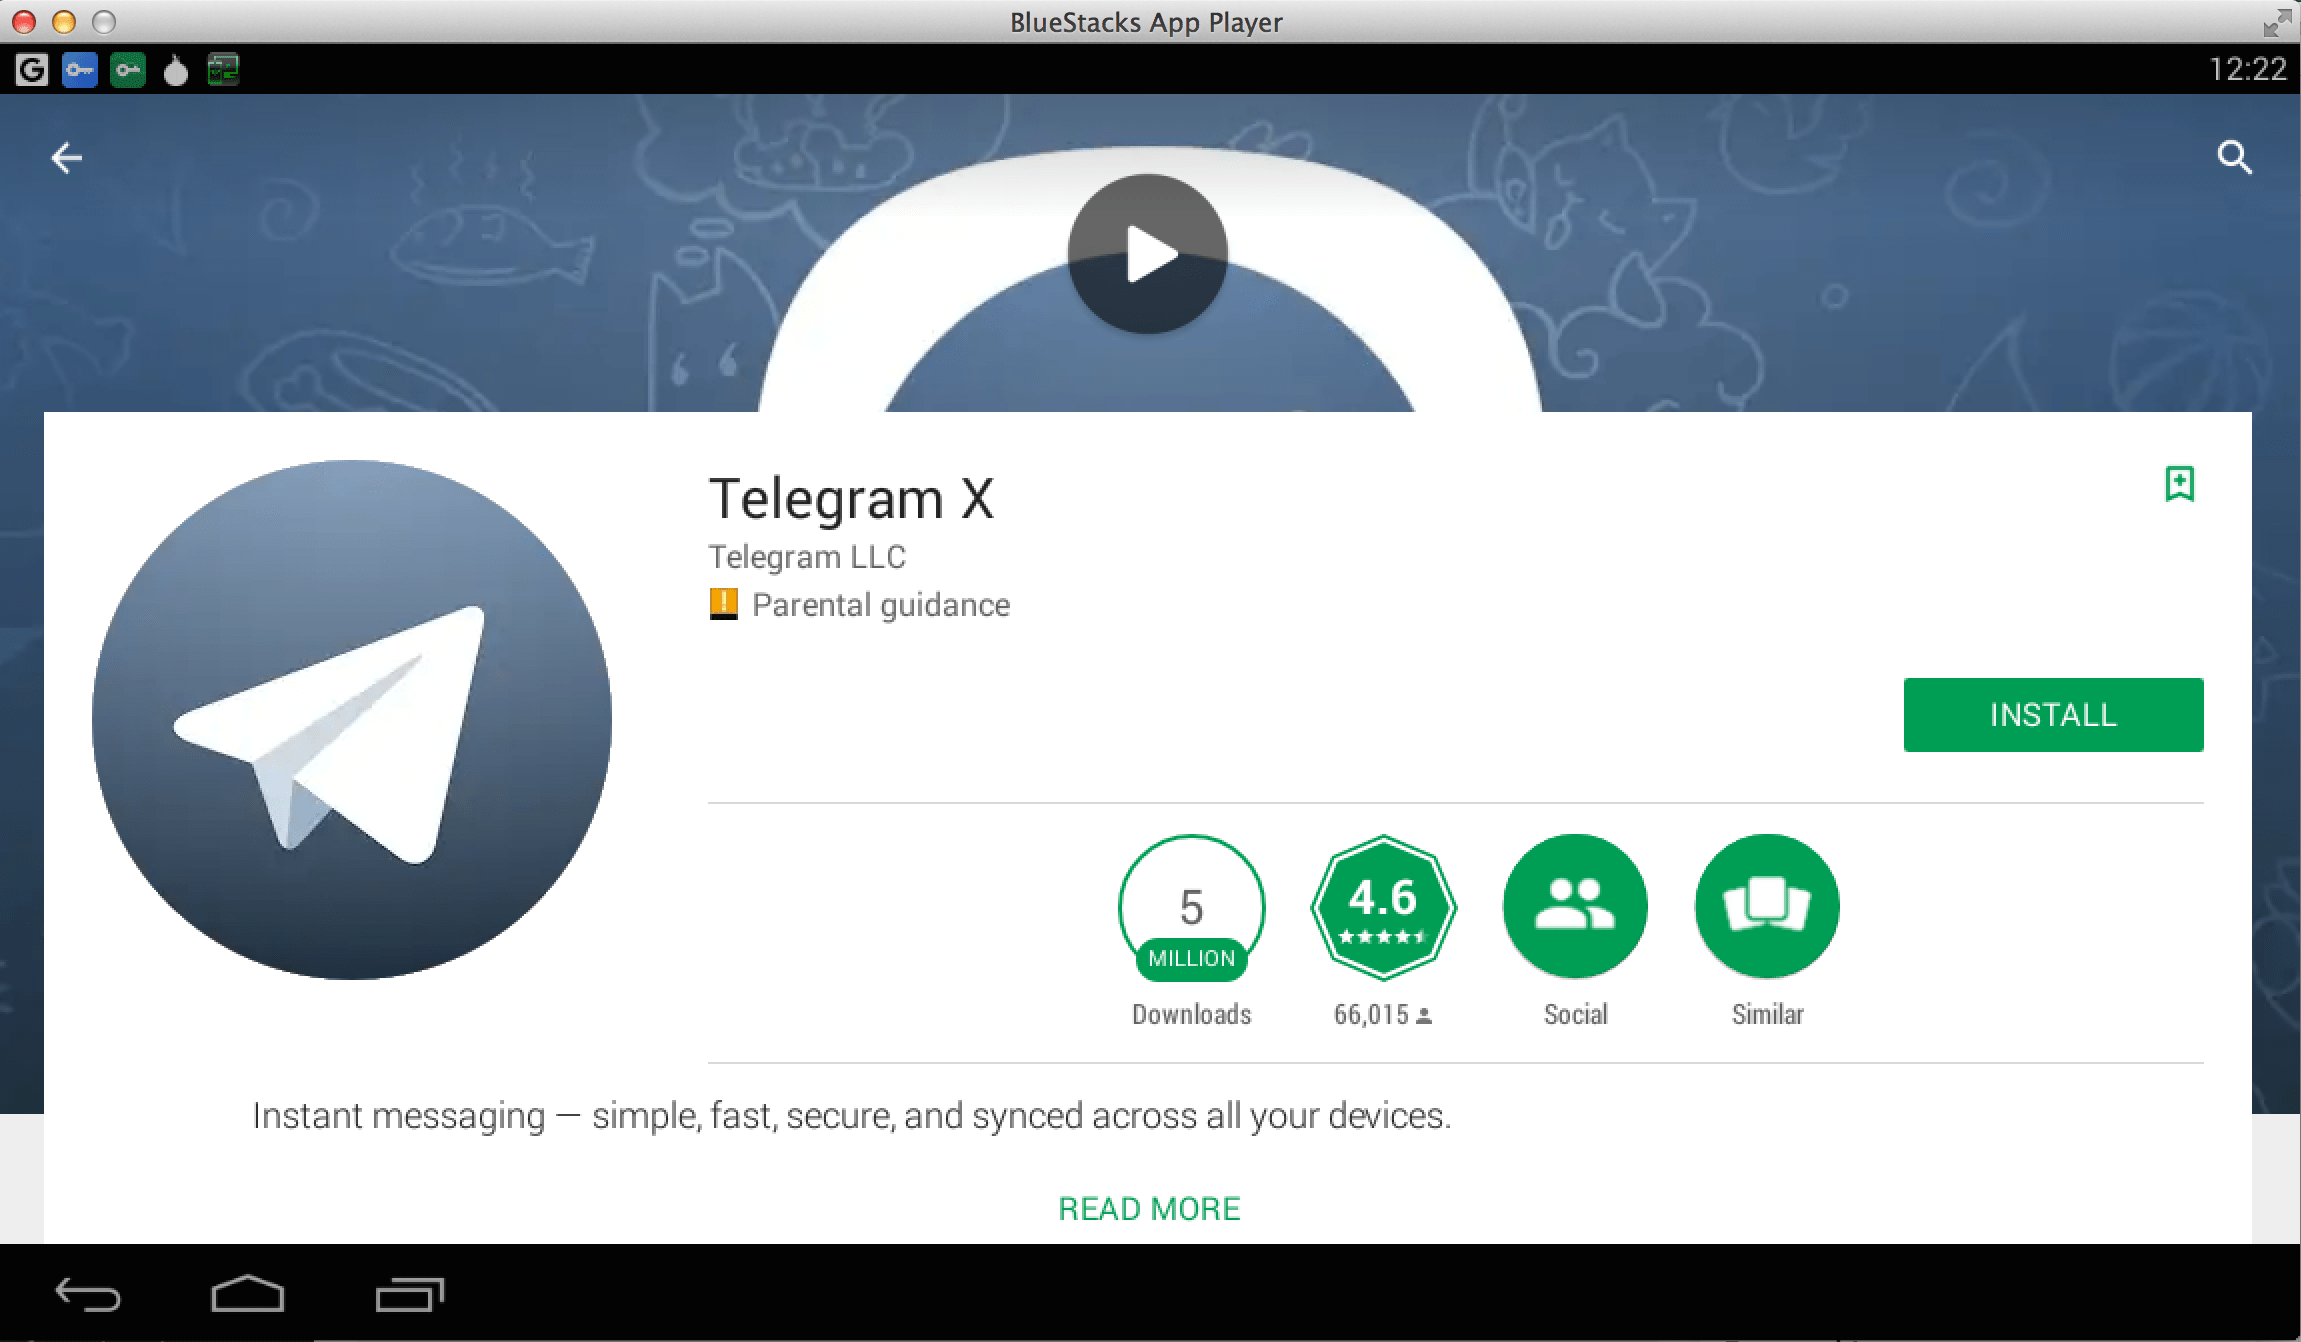 telegram download for pc